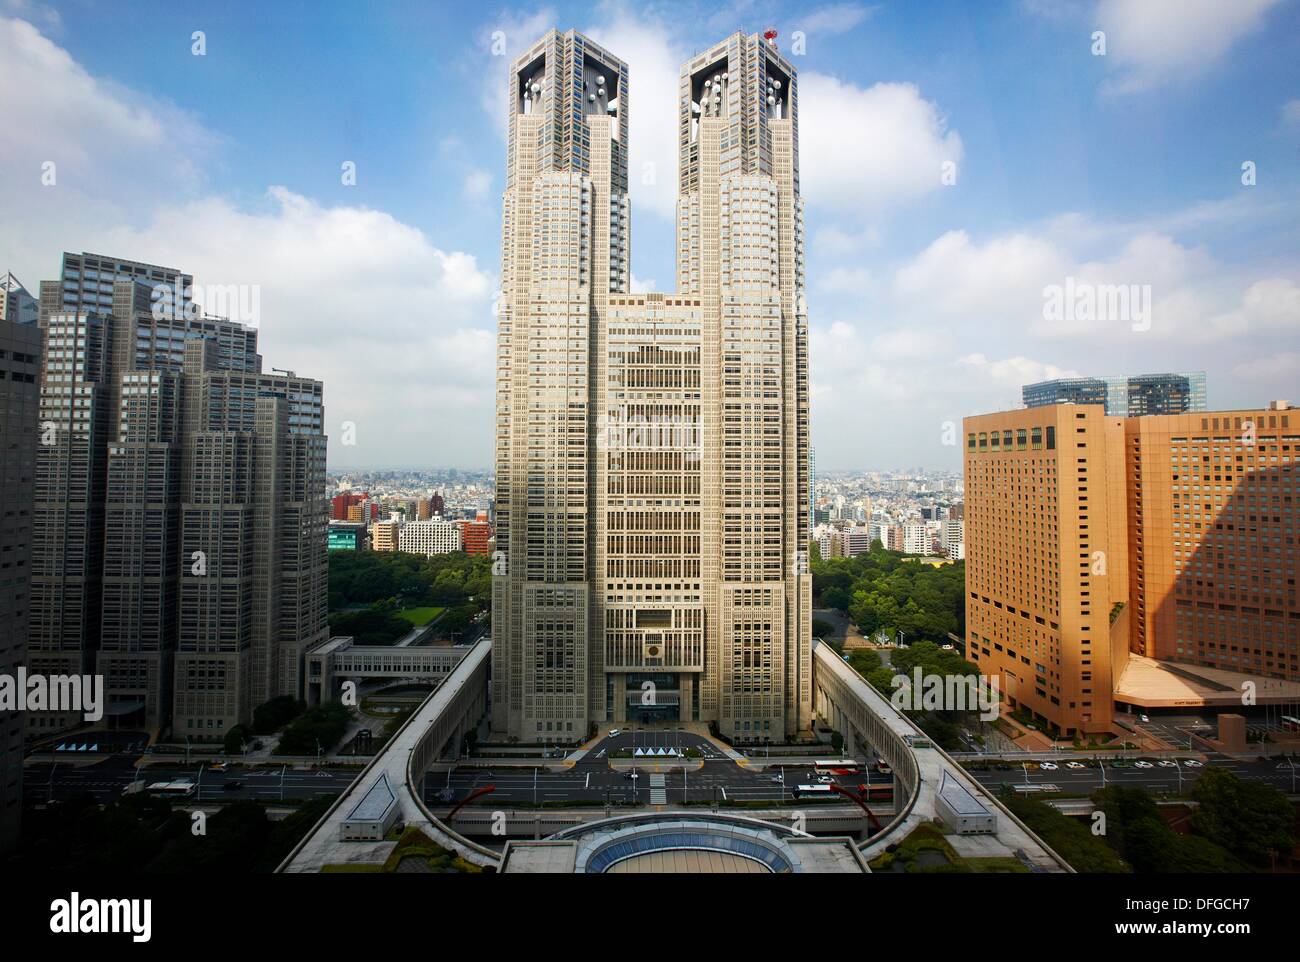 Tokyo Metropolitan Government building, Shinjuku district, Tokyo, Japan Stock Photo